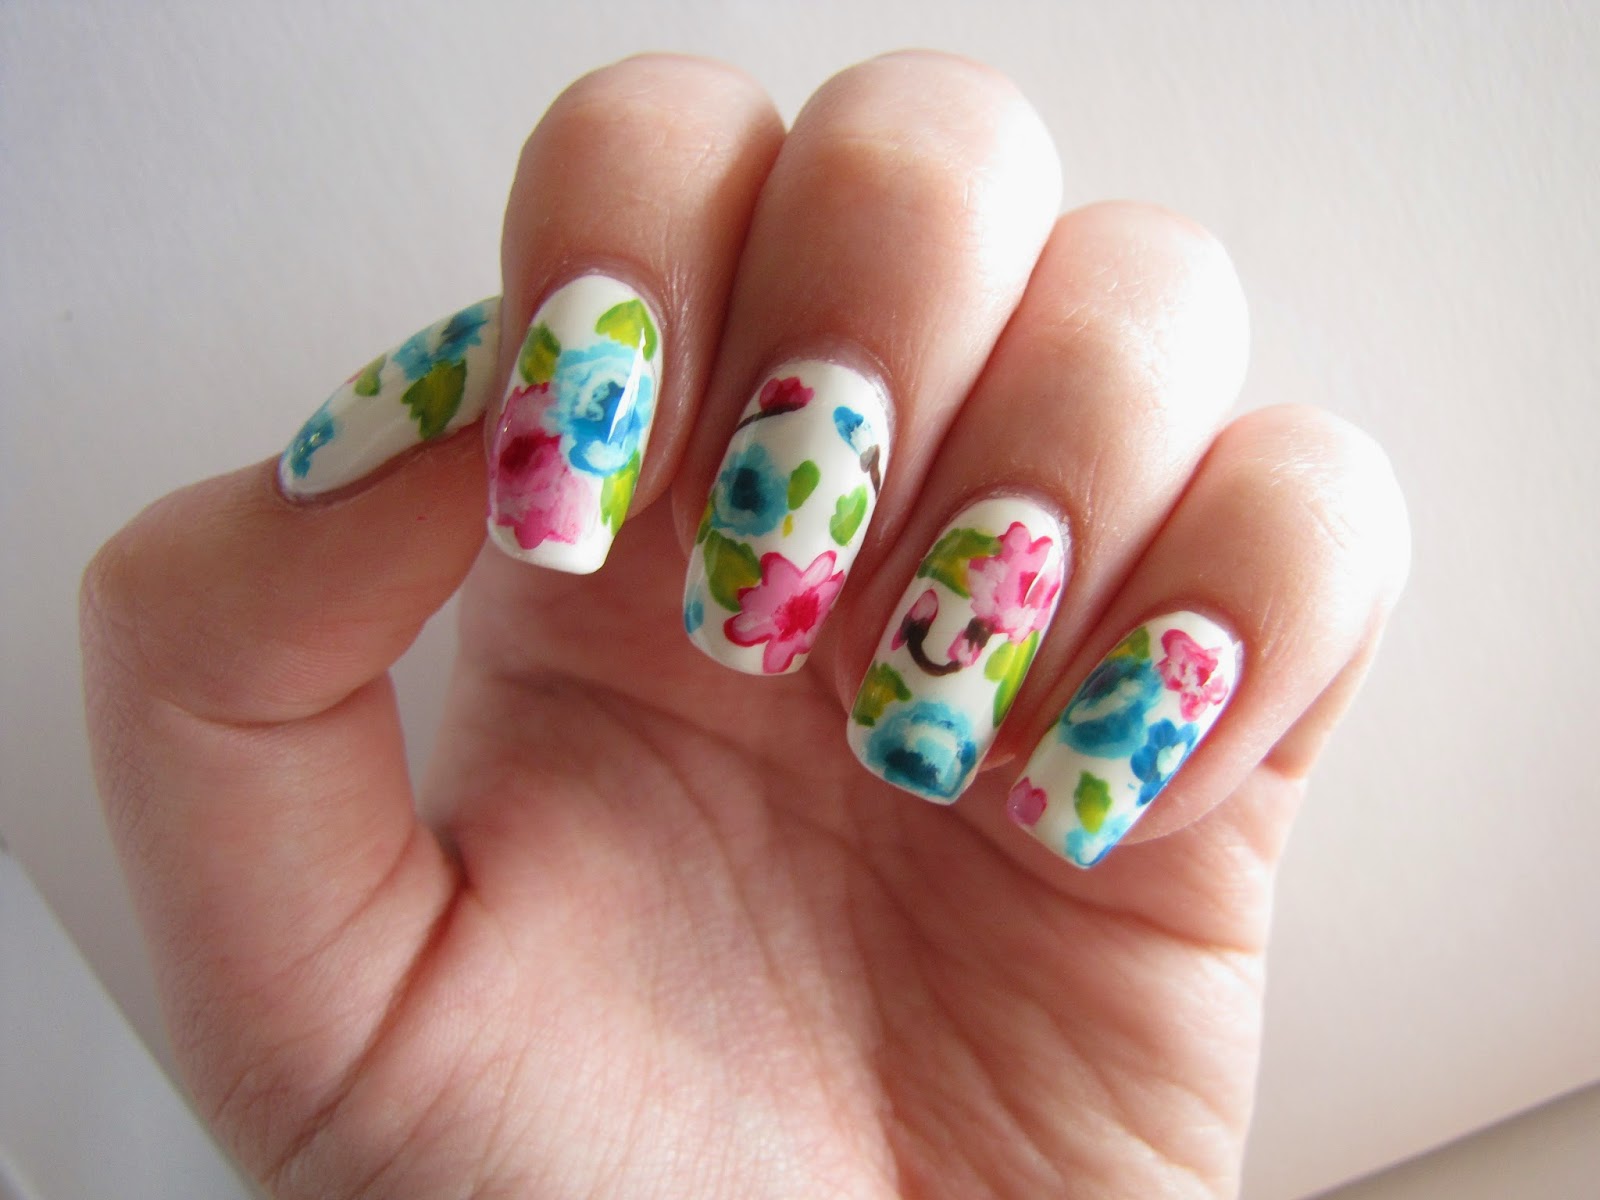 Nails By Bayles: Girly Floral Nail Art